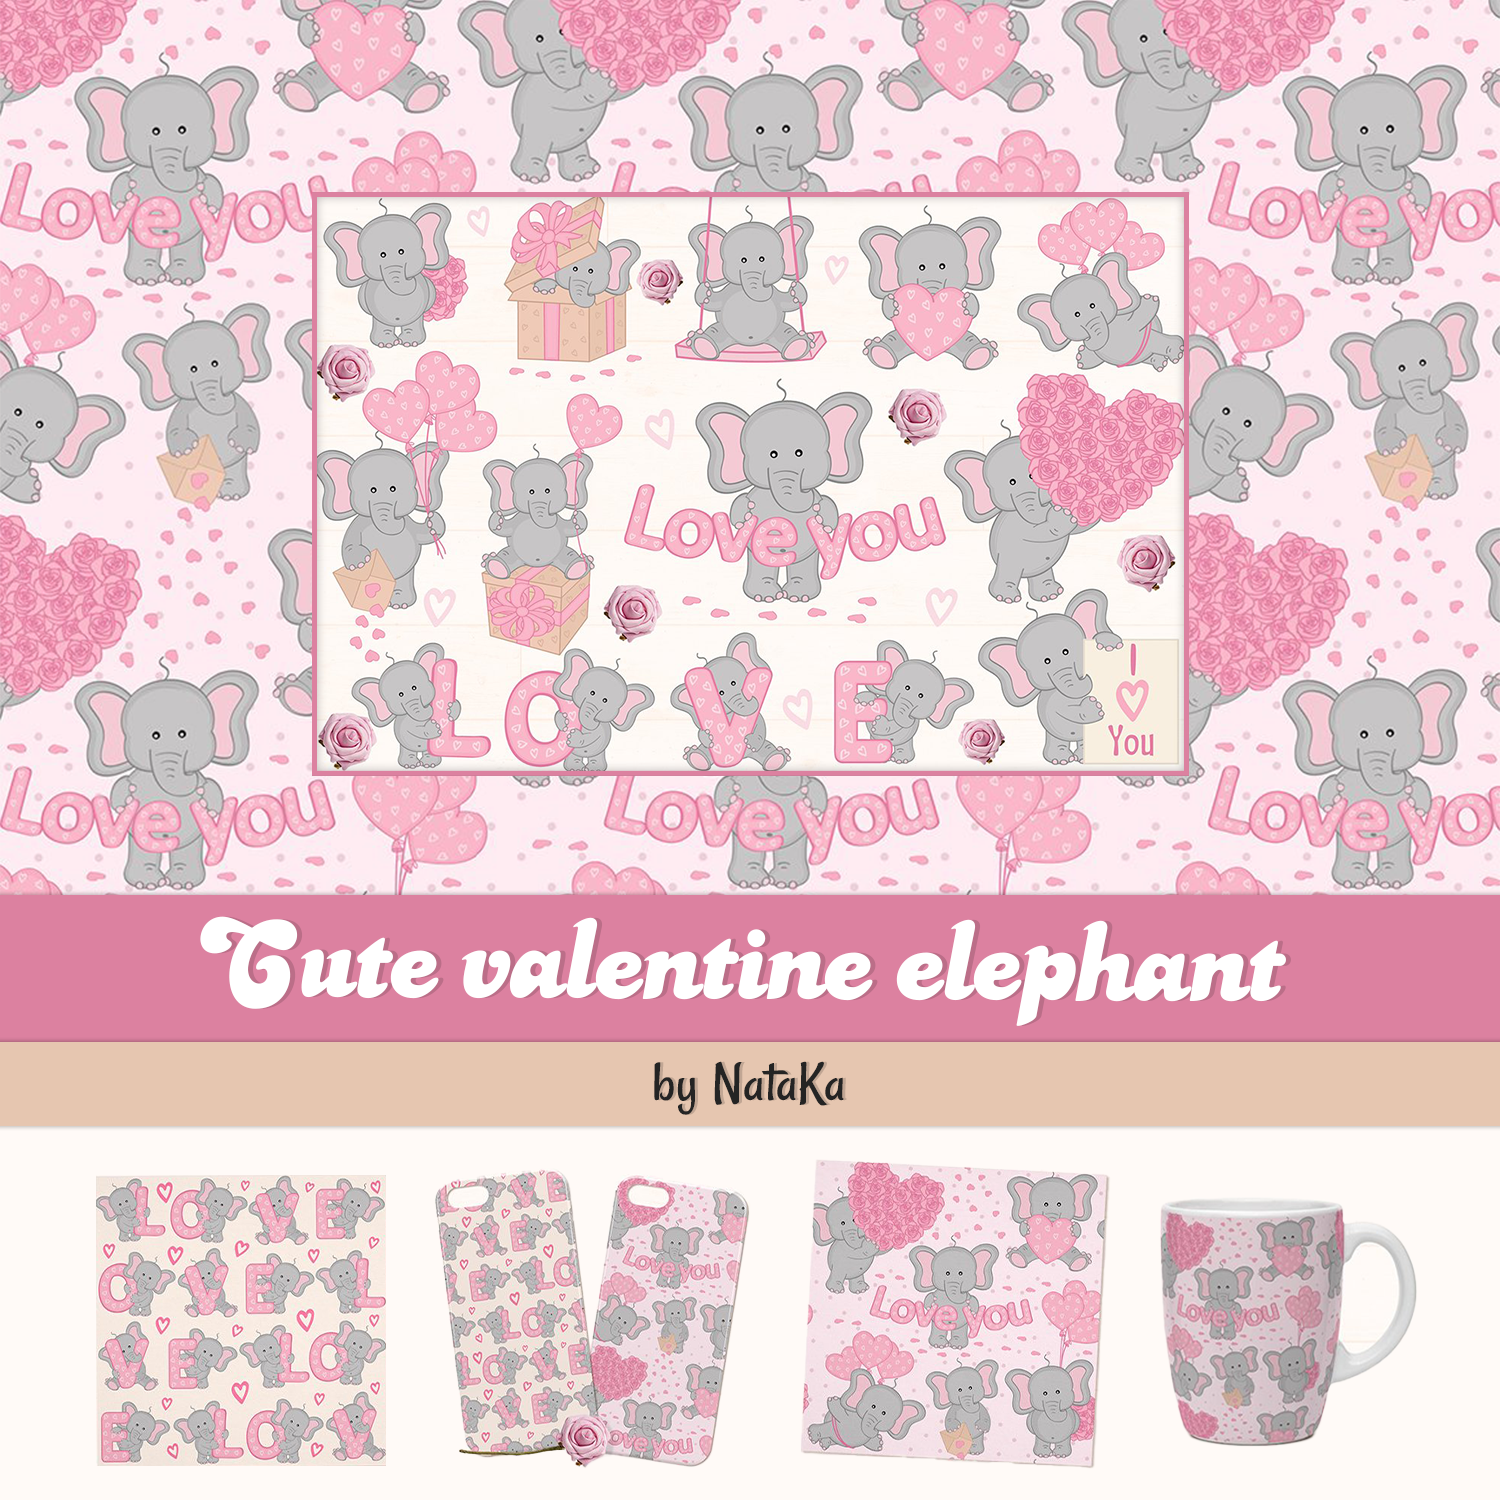 Illustrations with sute valentine elephant.